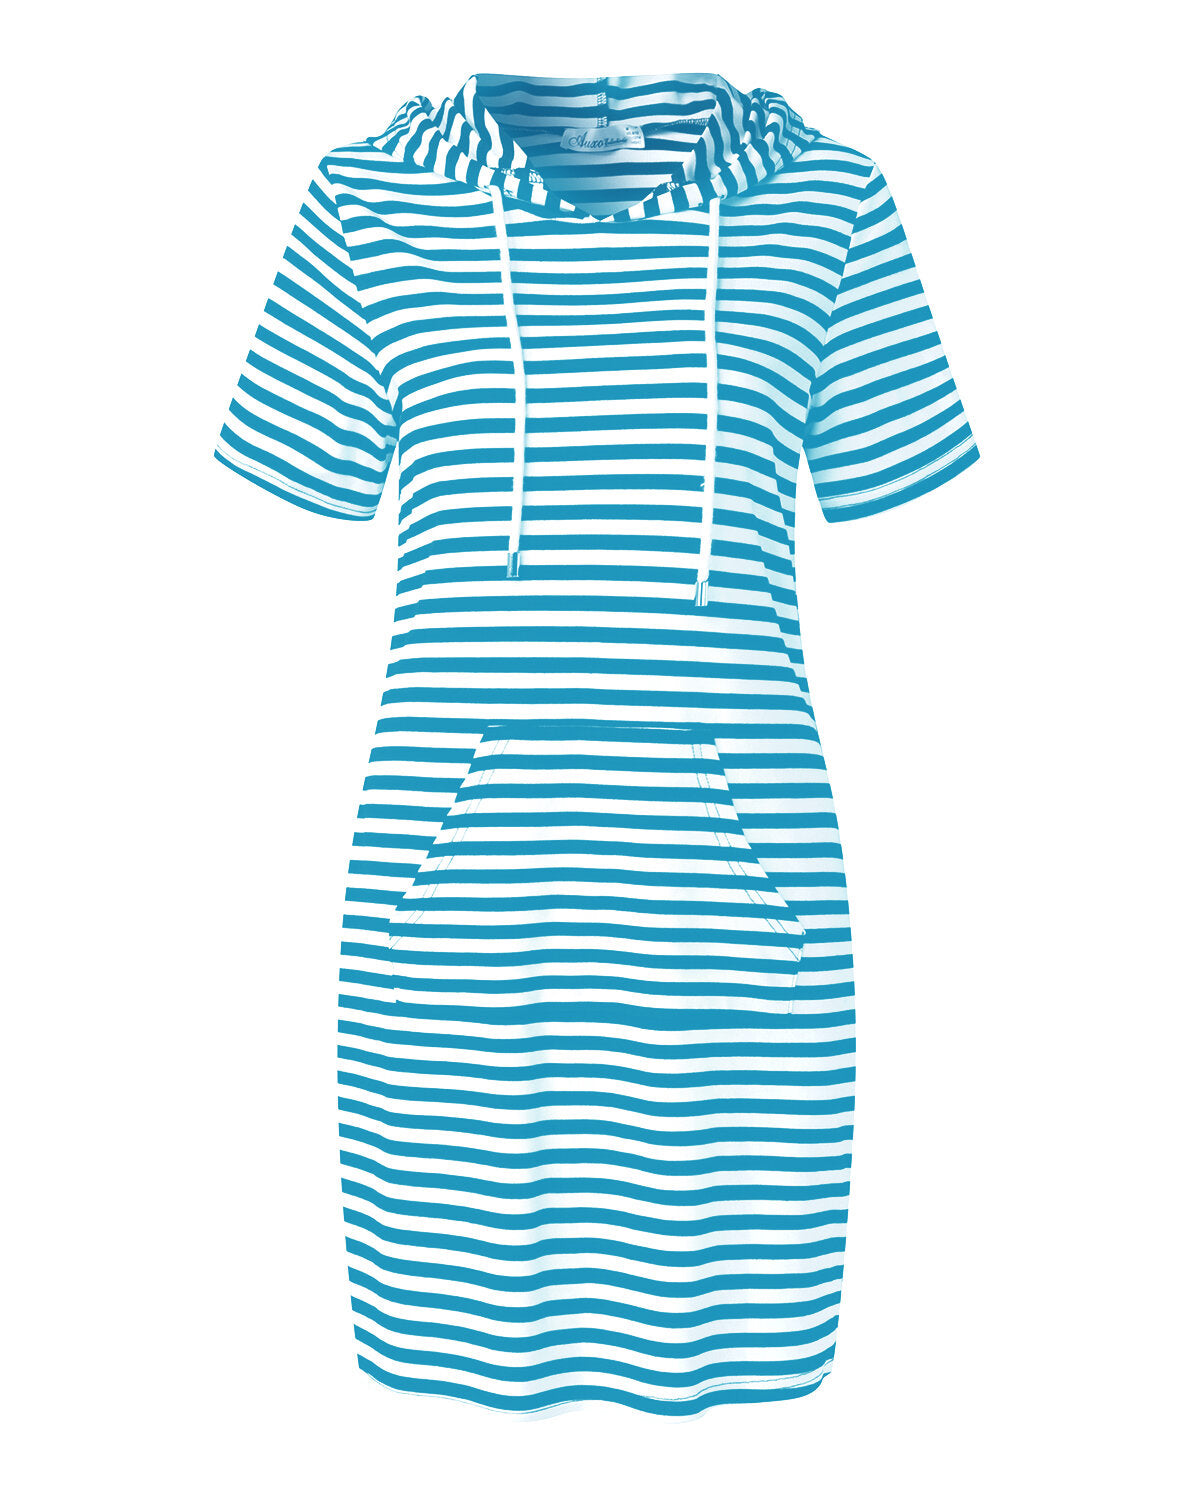 Striped Drawstring Short Sleeve Casual Shirt Pocket Dress